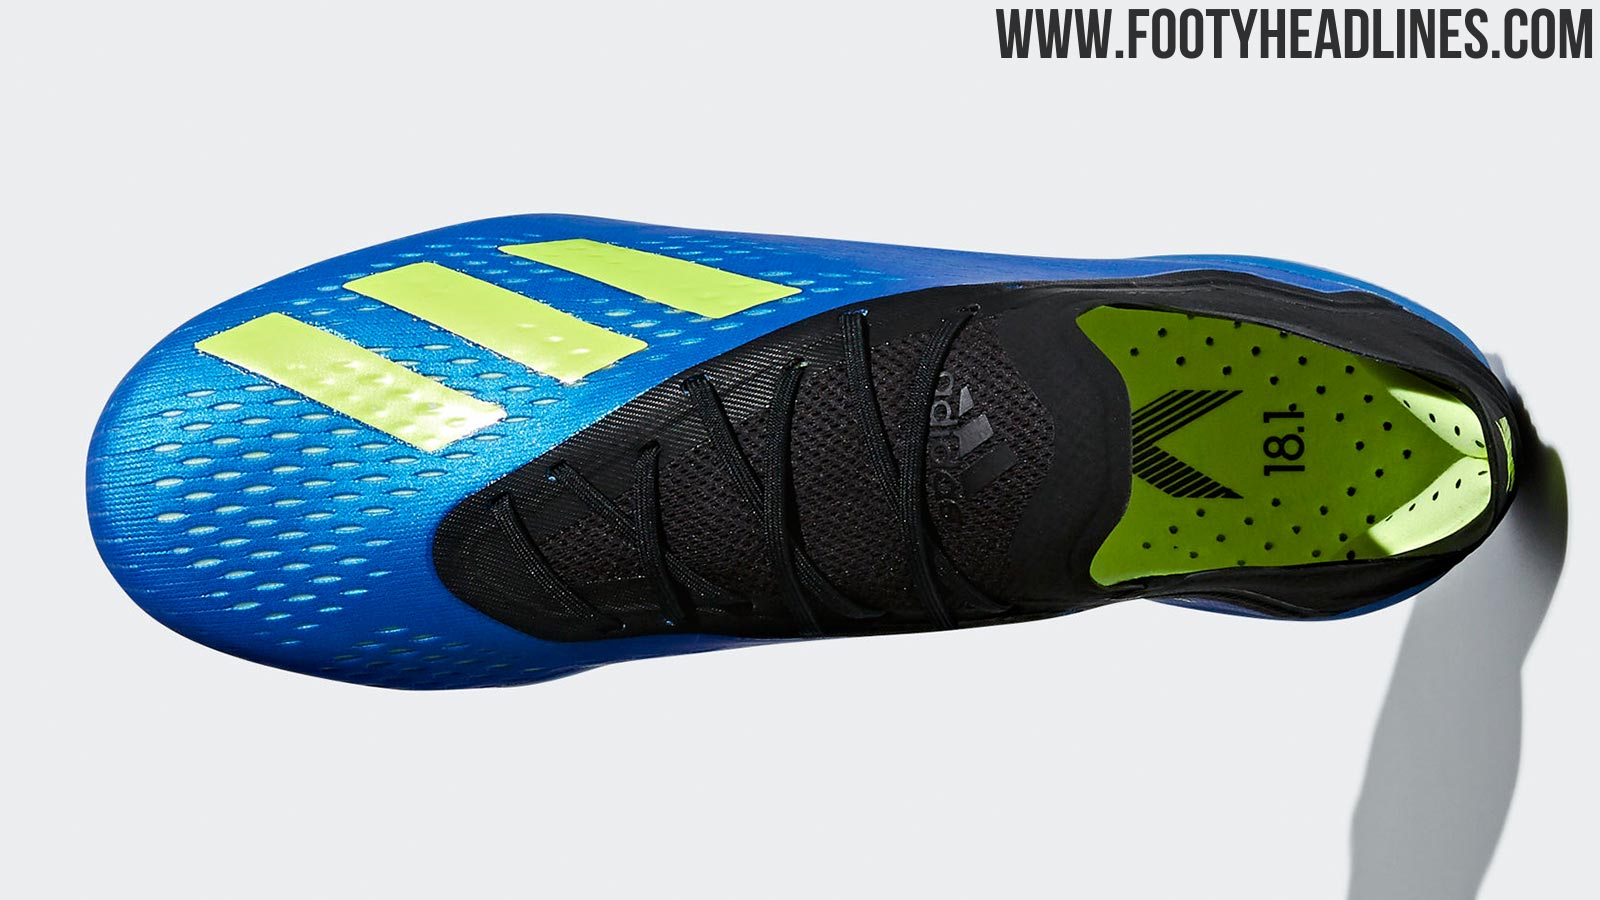 All-New Next-Gen Adidas X 18.1 'Energy Mode' 2018 World Cup Boots ...